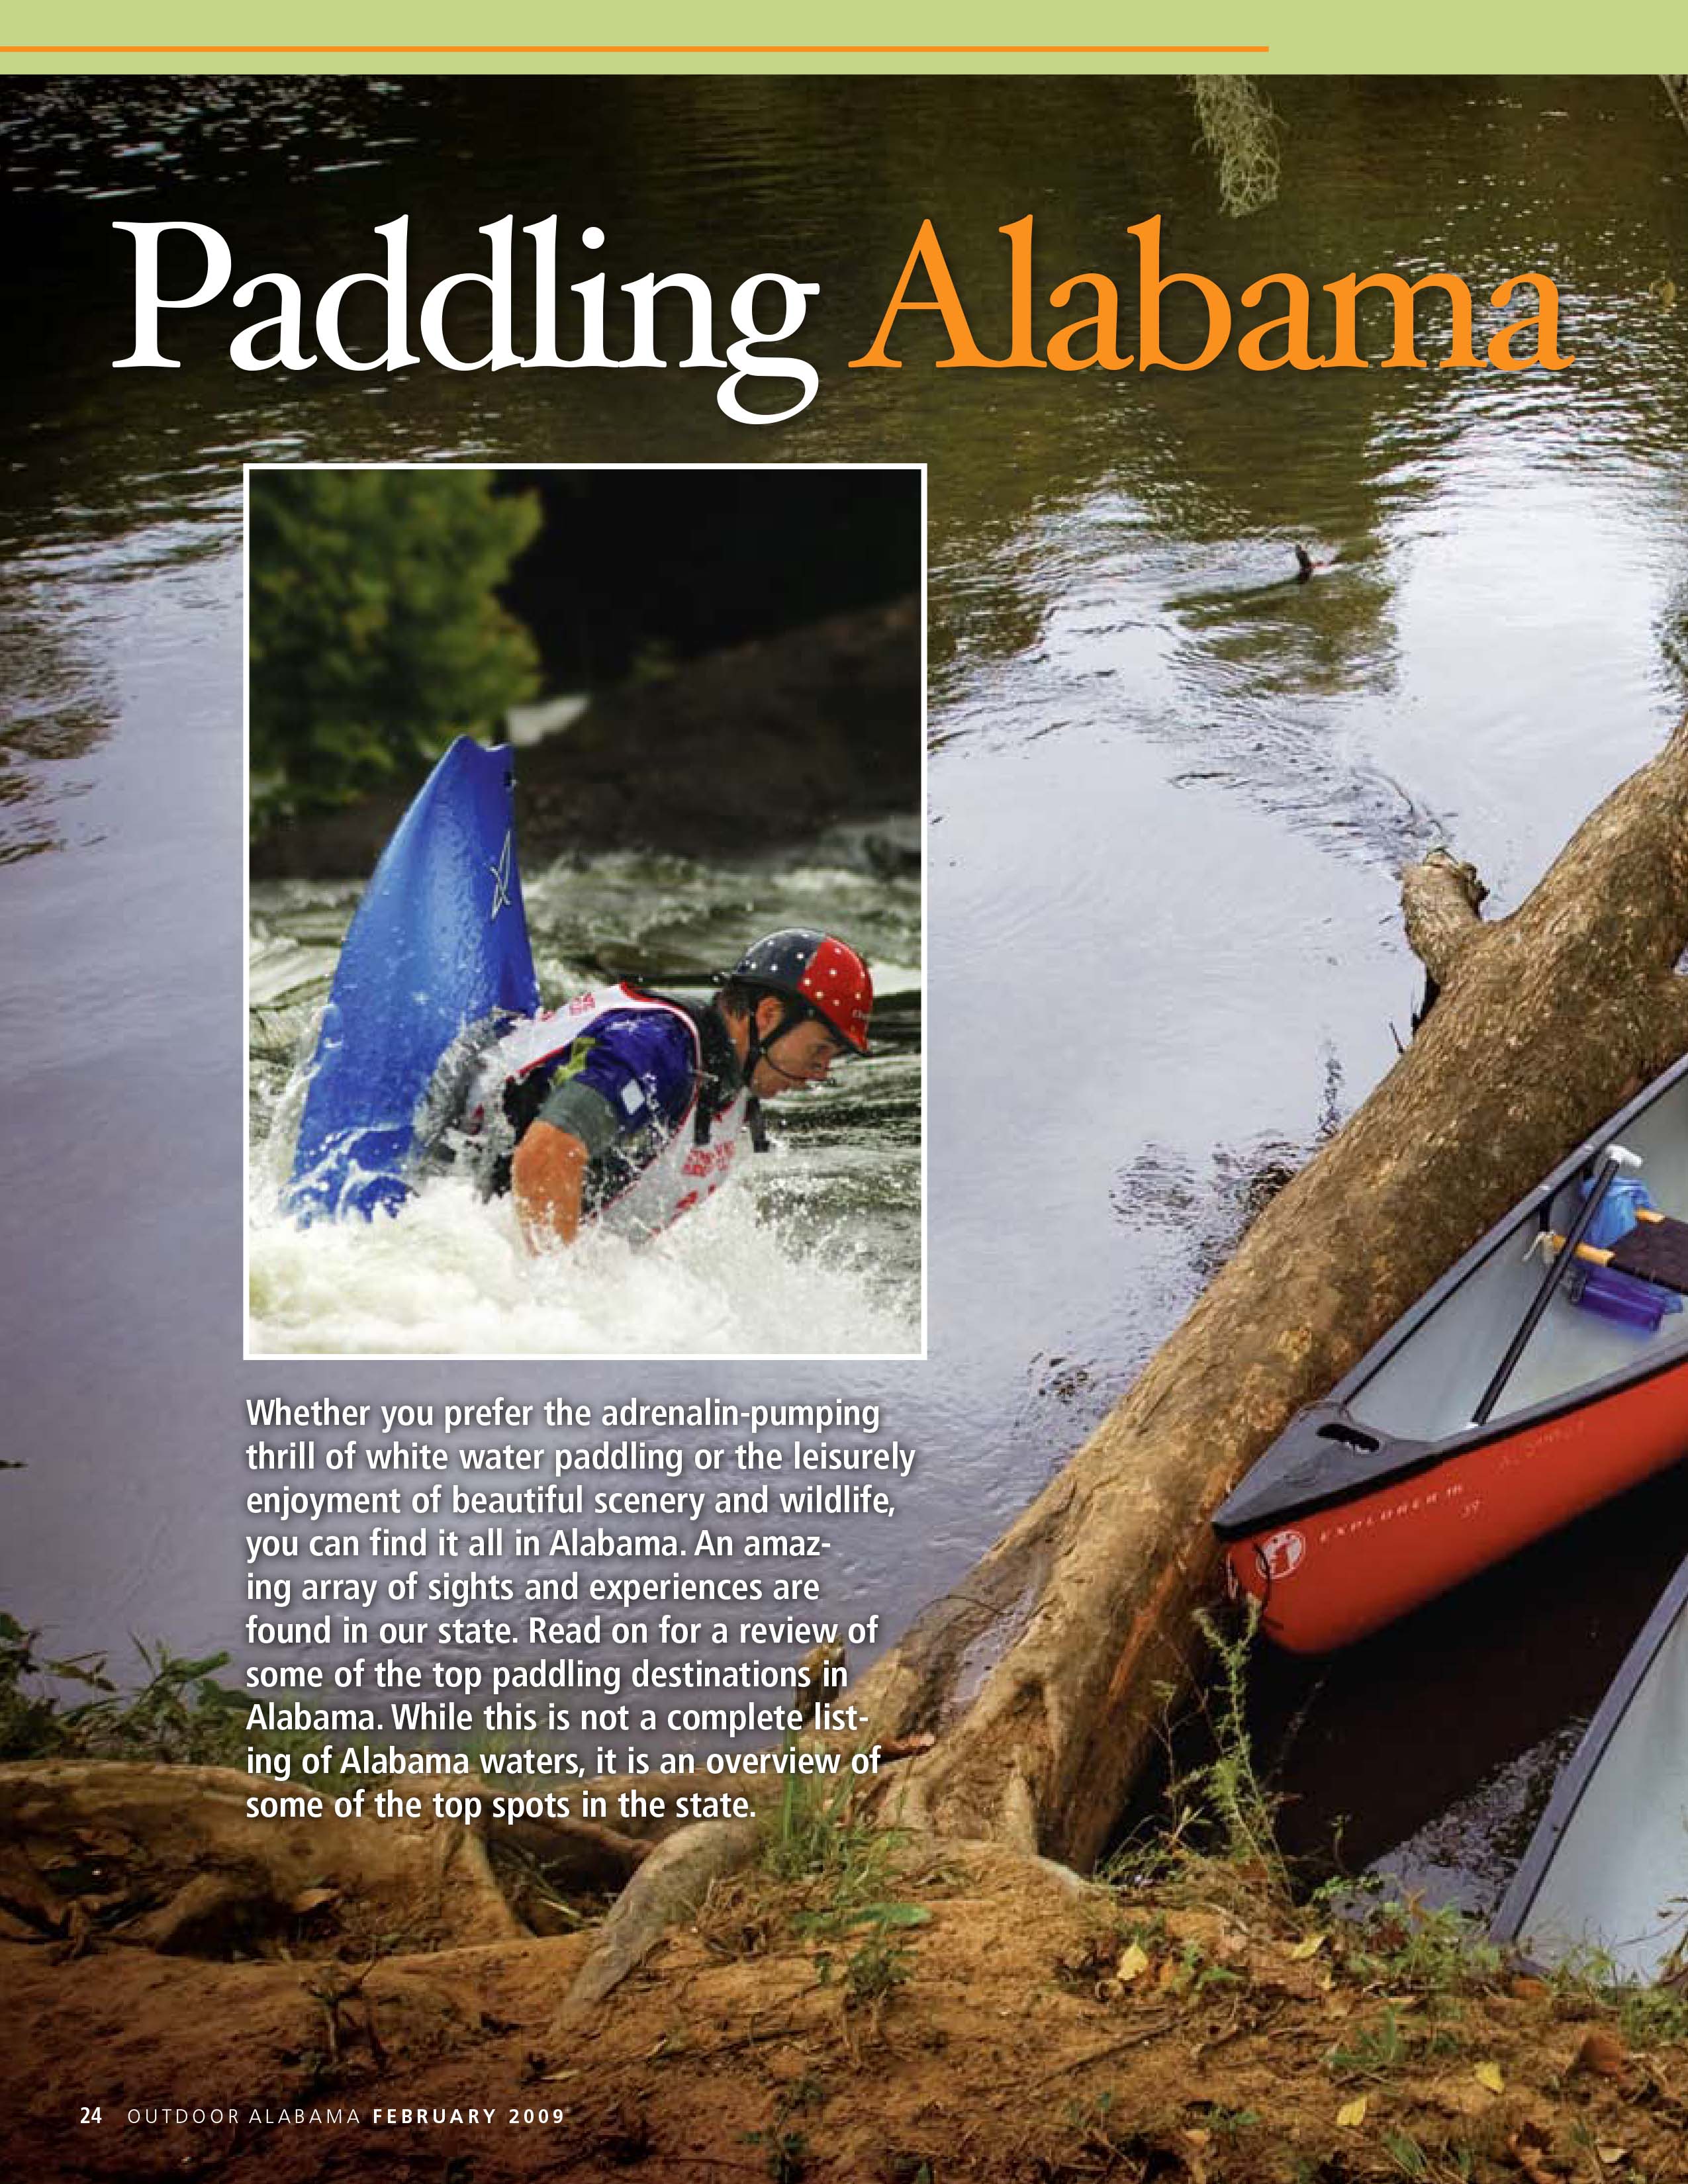 Paddling Alabama By Eric Beck, MD